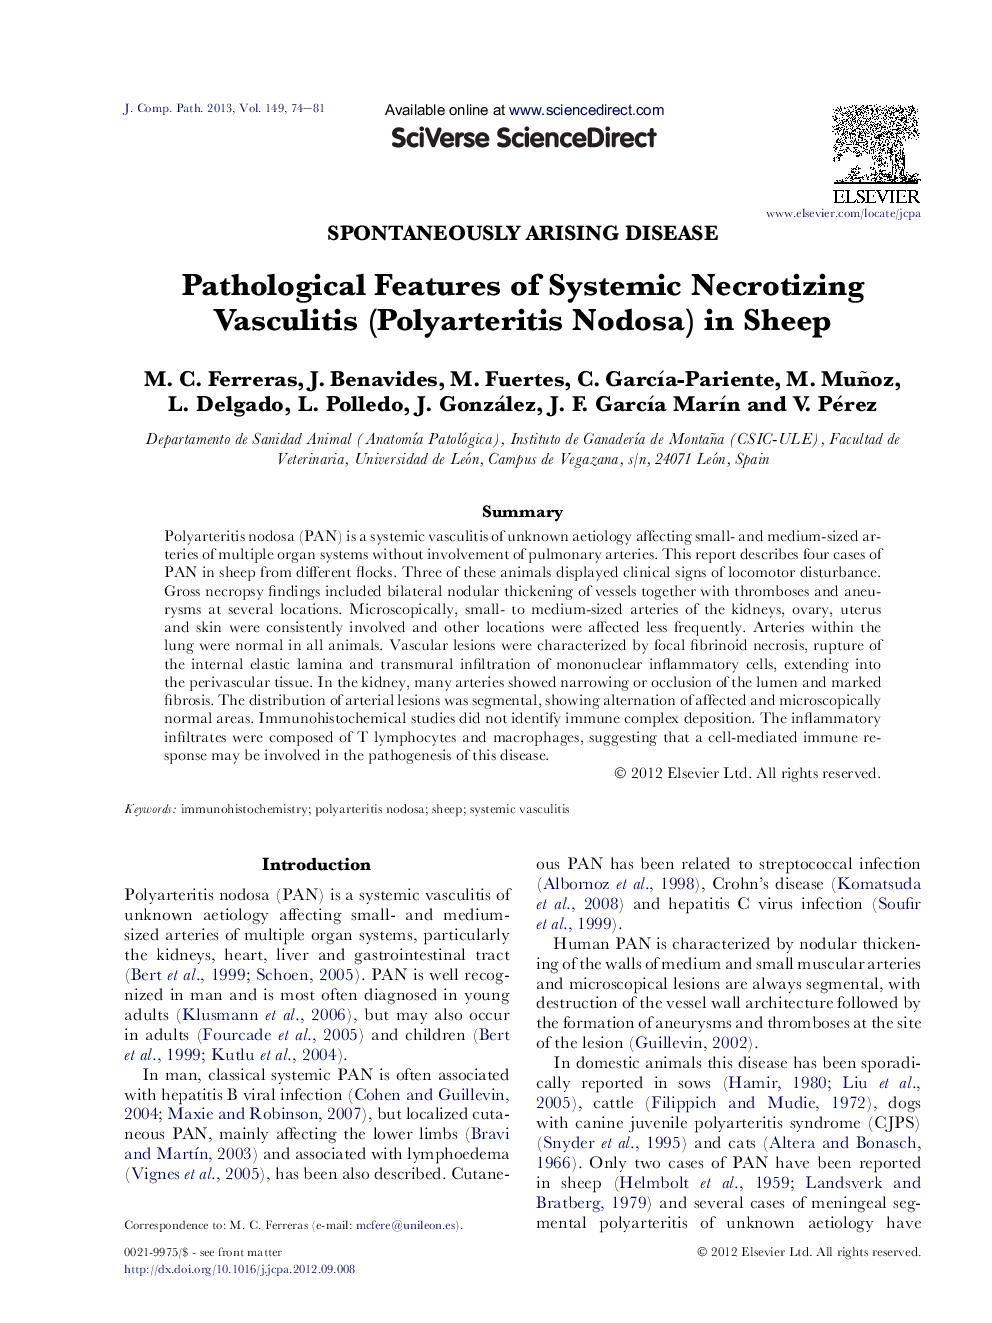 Pathological Features of Systemic Necrotizing Vasculitis (Polyarteritis Nodosa) in Sheep